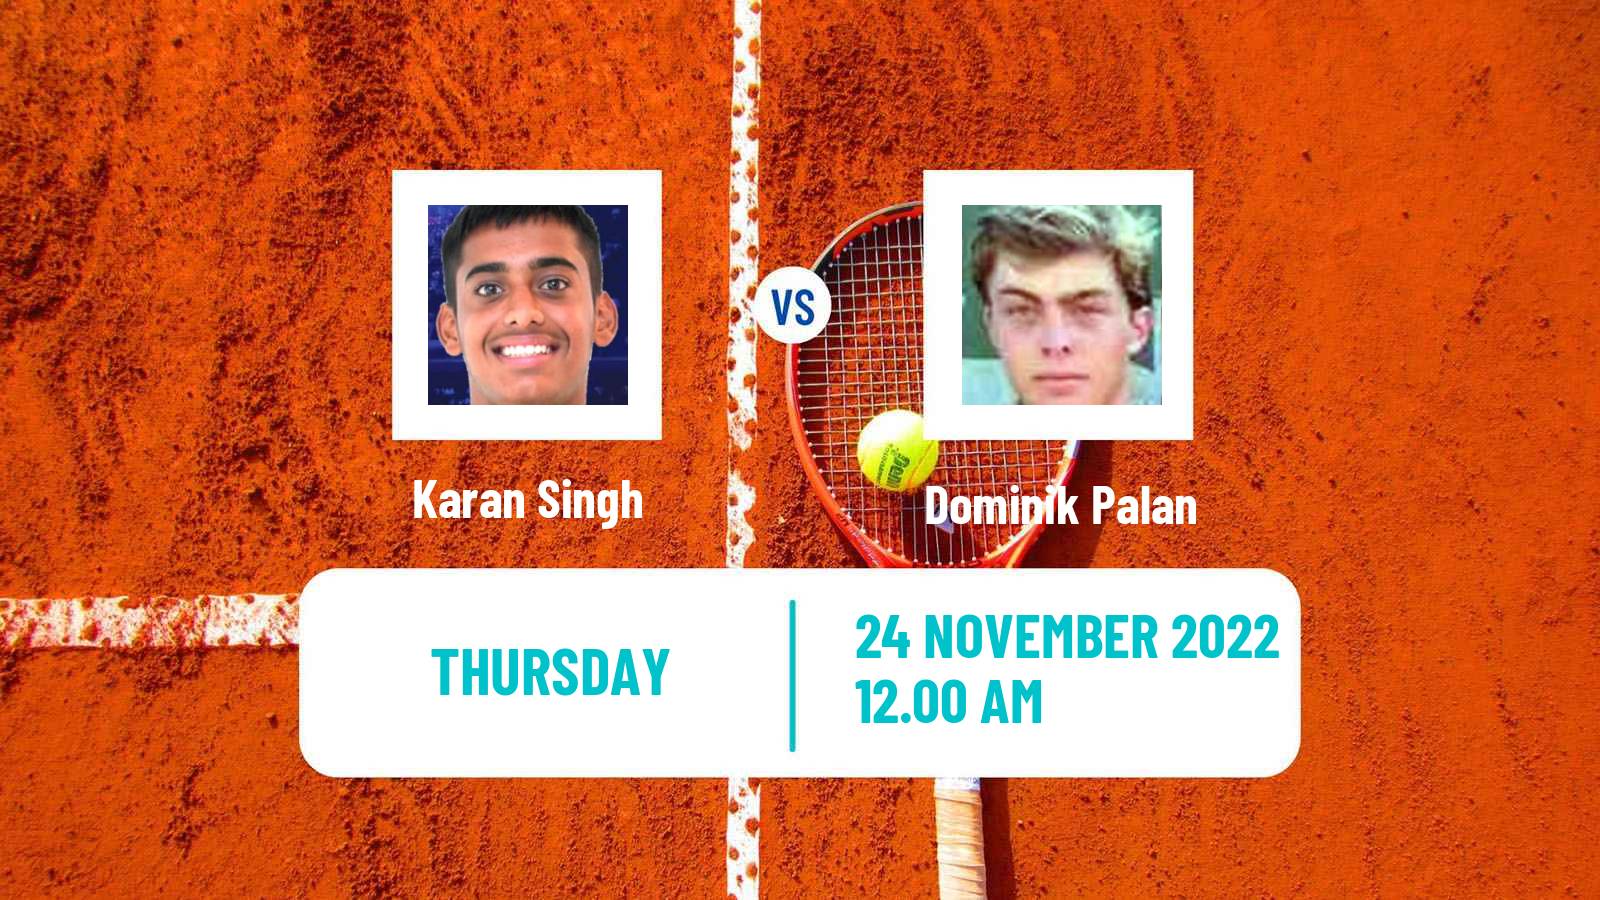 Tennis ITF Tournaments Karan Singh - Dominik Palan